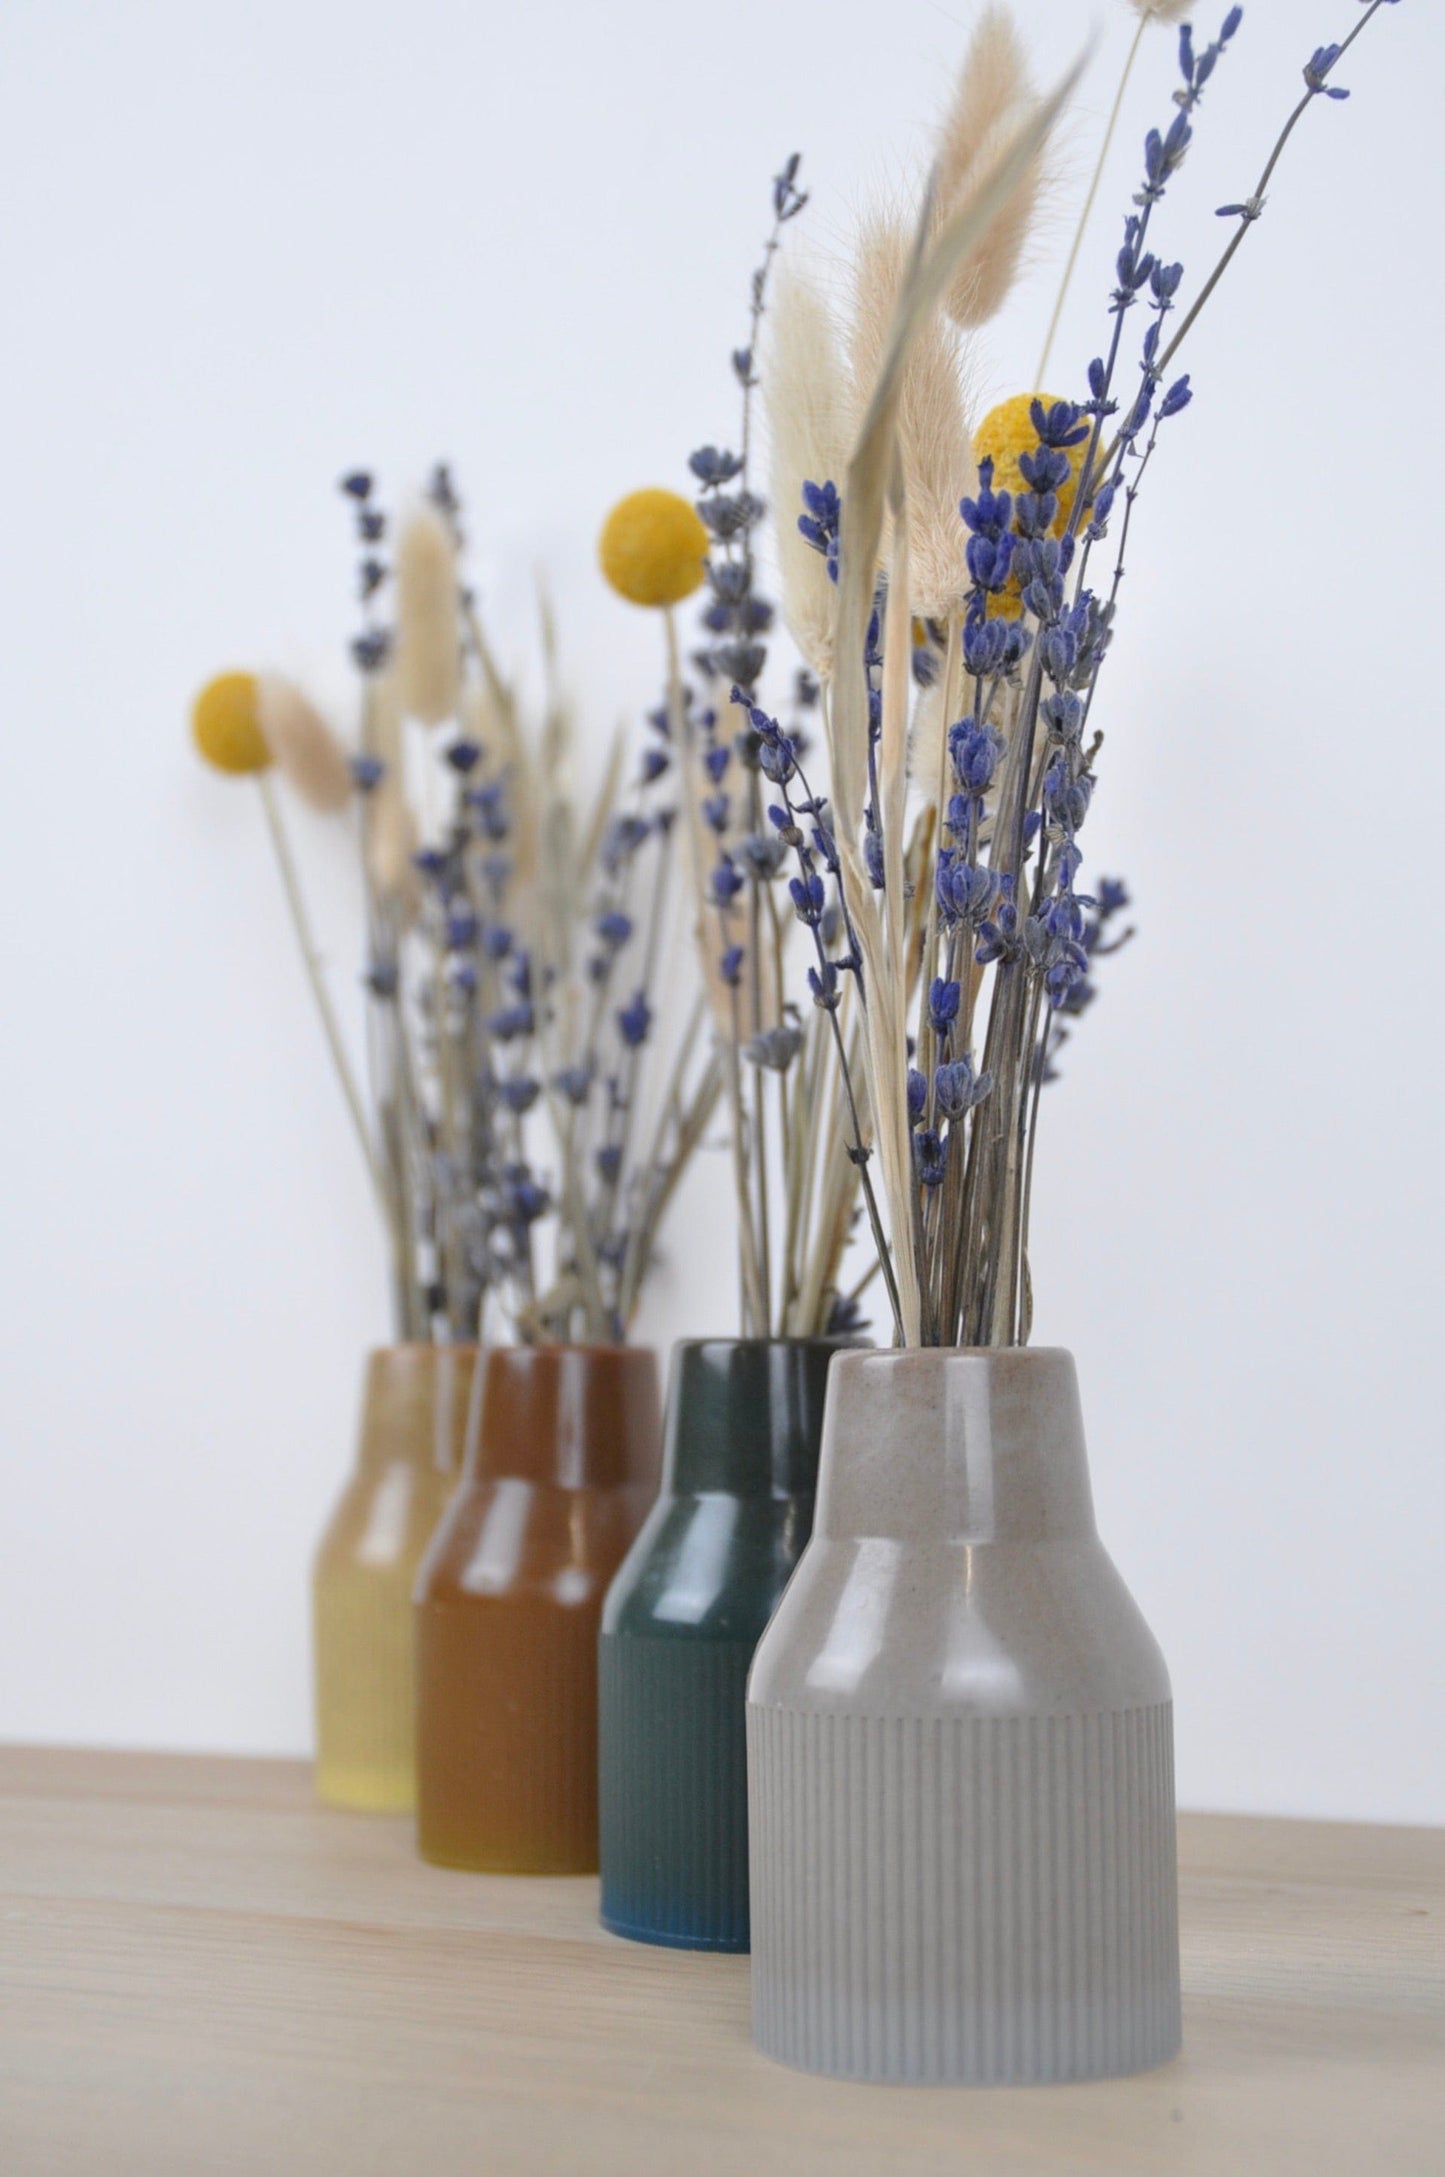 PRIOR SHOP Vase Dust & Plant Resin Small Vase - 'Grooved Bottle' - (various colours)